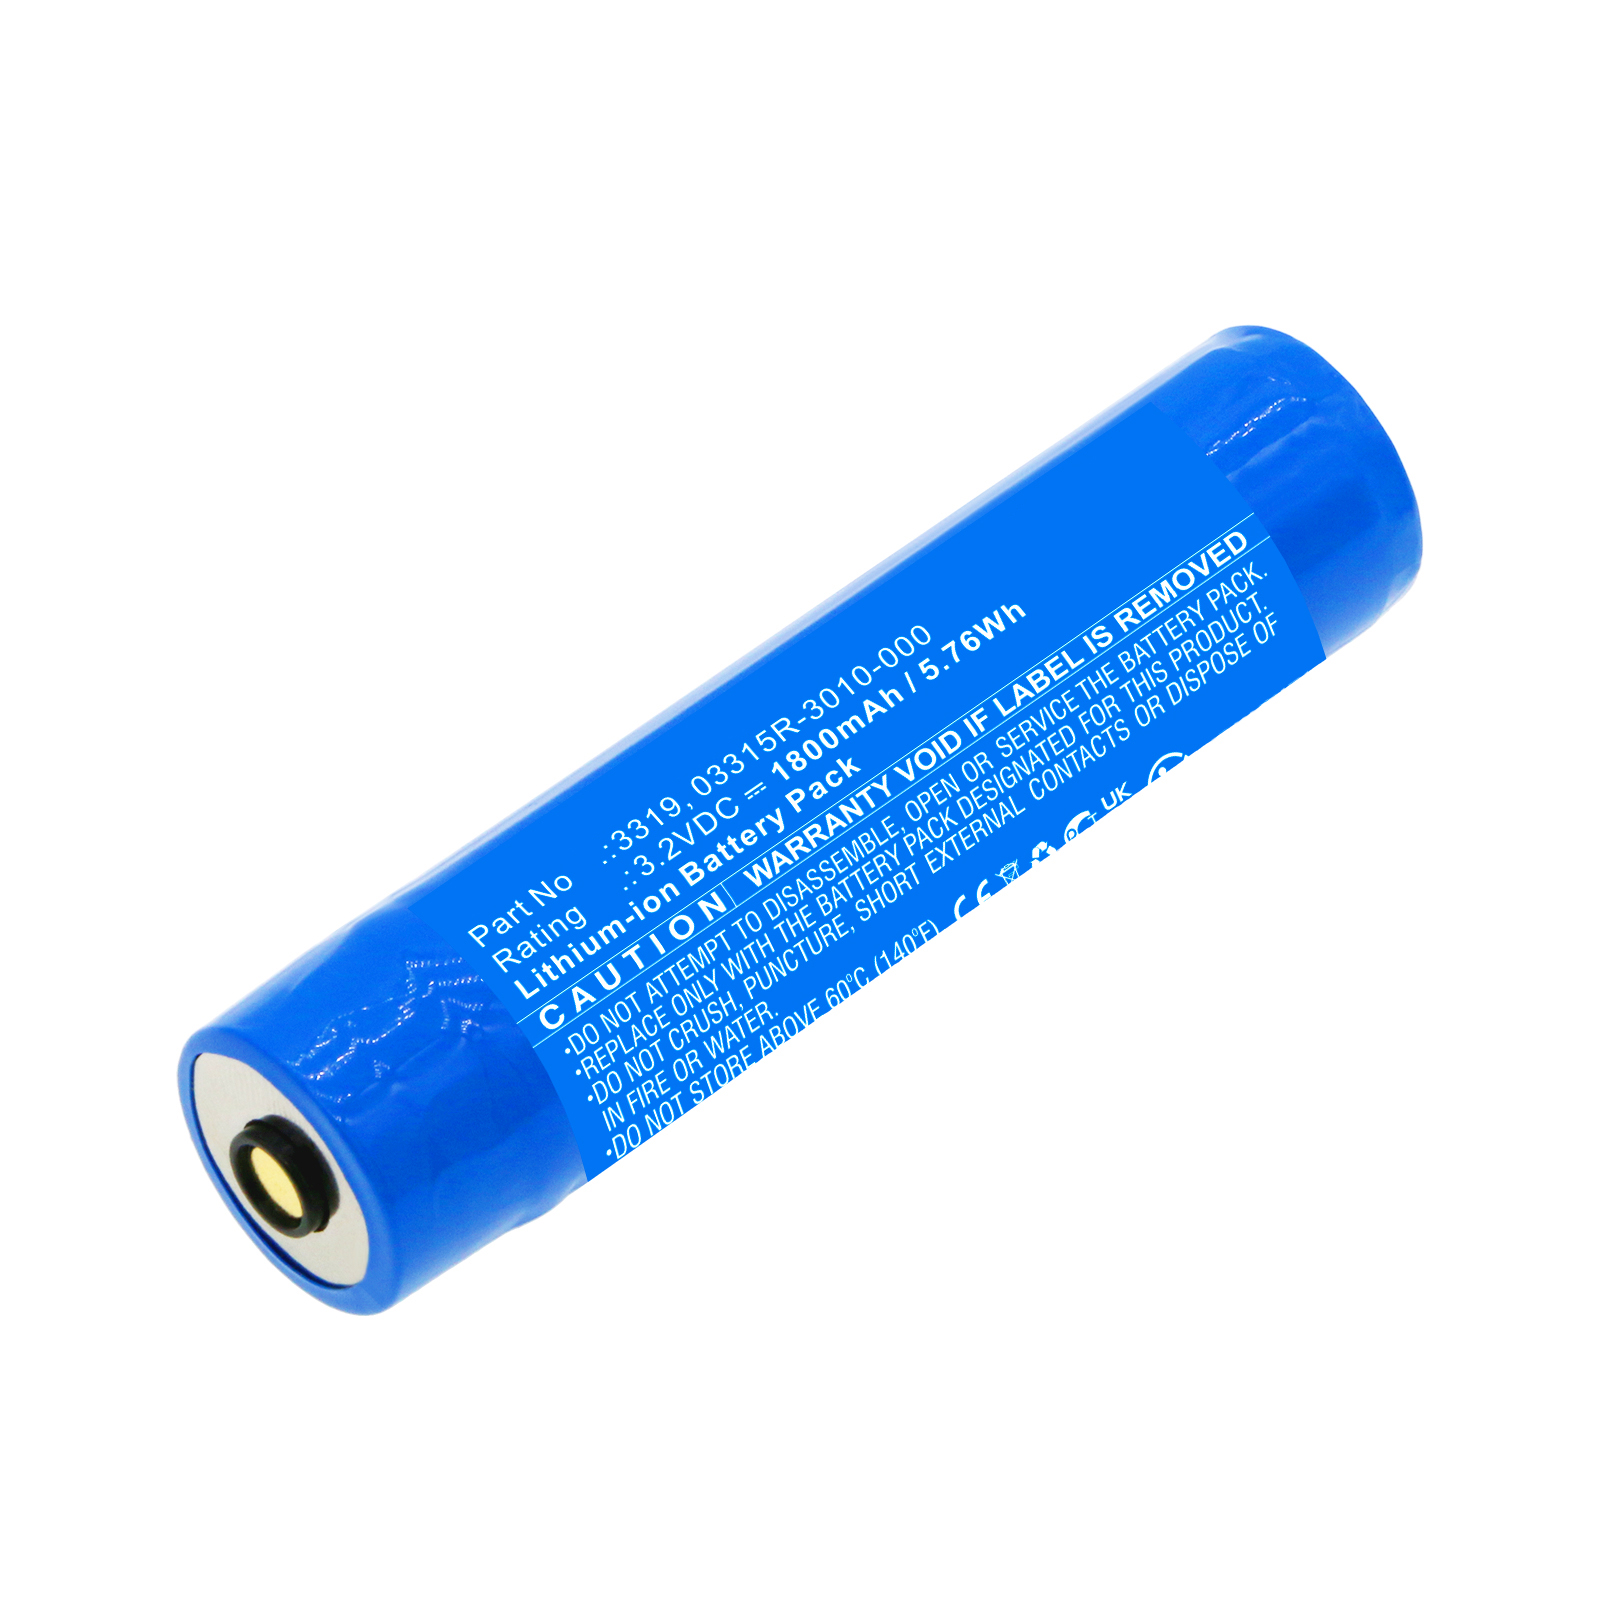 Synergy Digital Flashlight Battery, Compatible with Pelican 03315R-3010-000 Flashlight Battery (LiFePO4, 3.2V, 1800mAh)